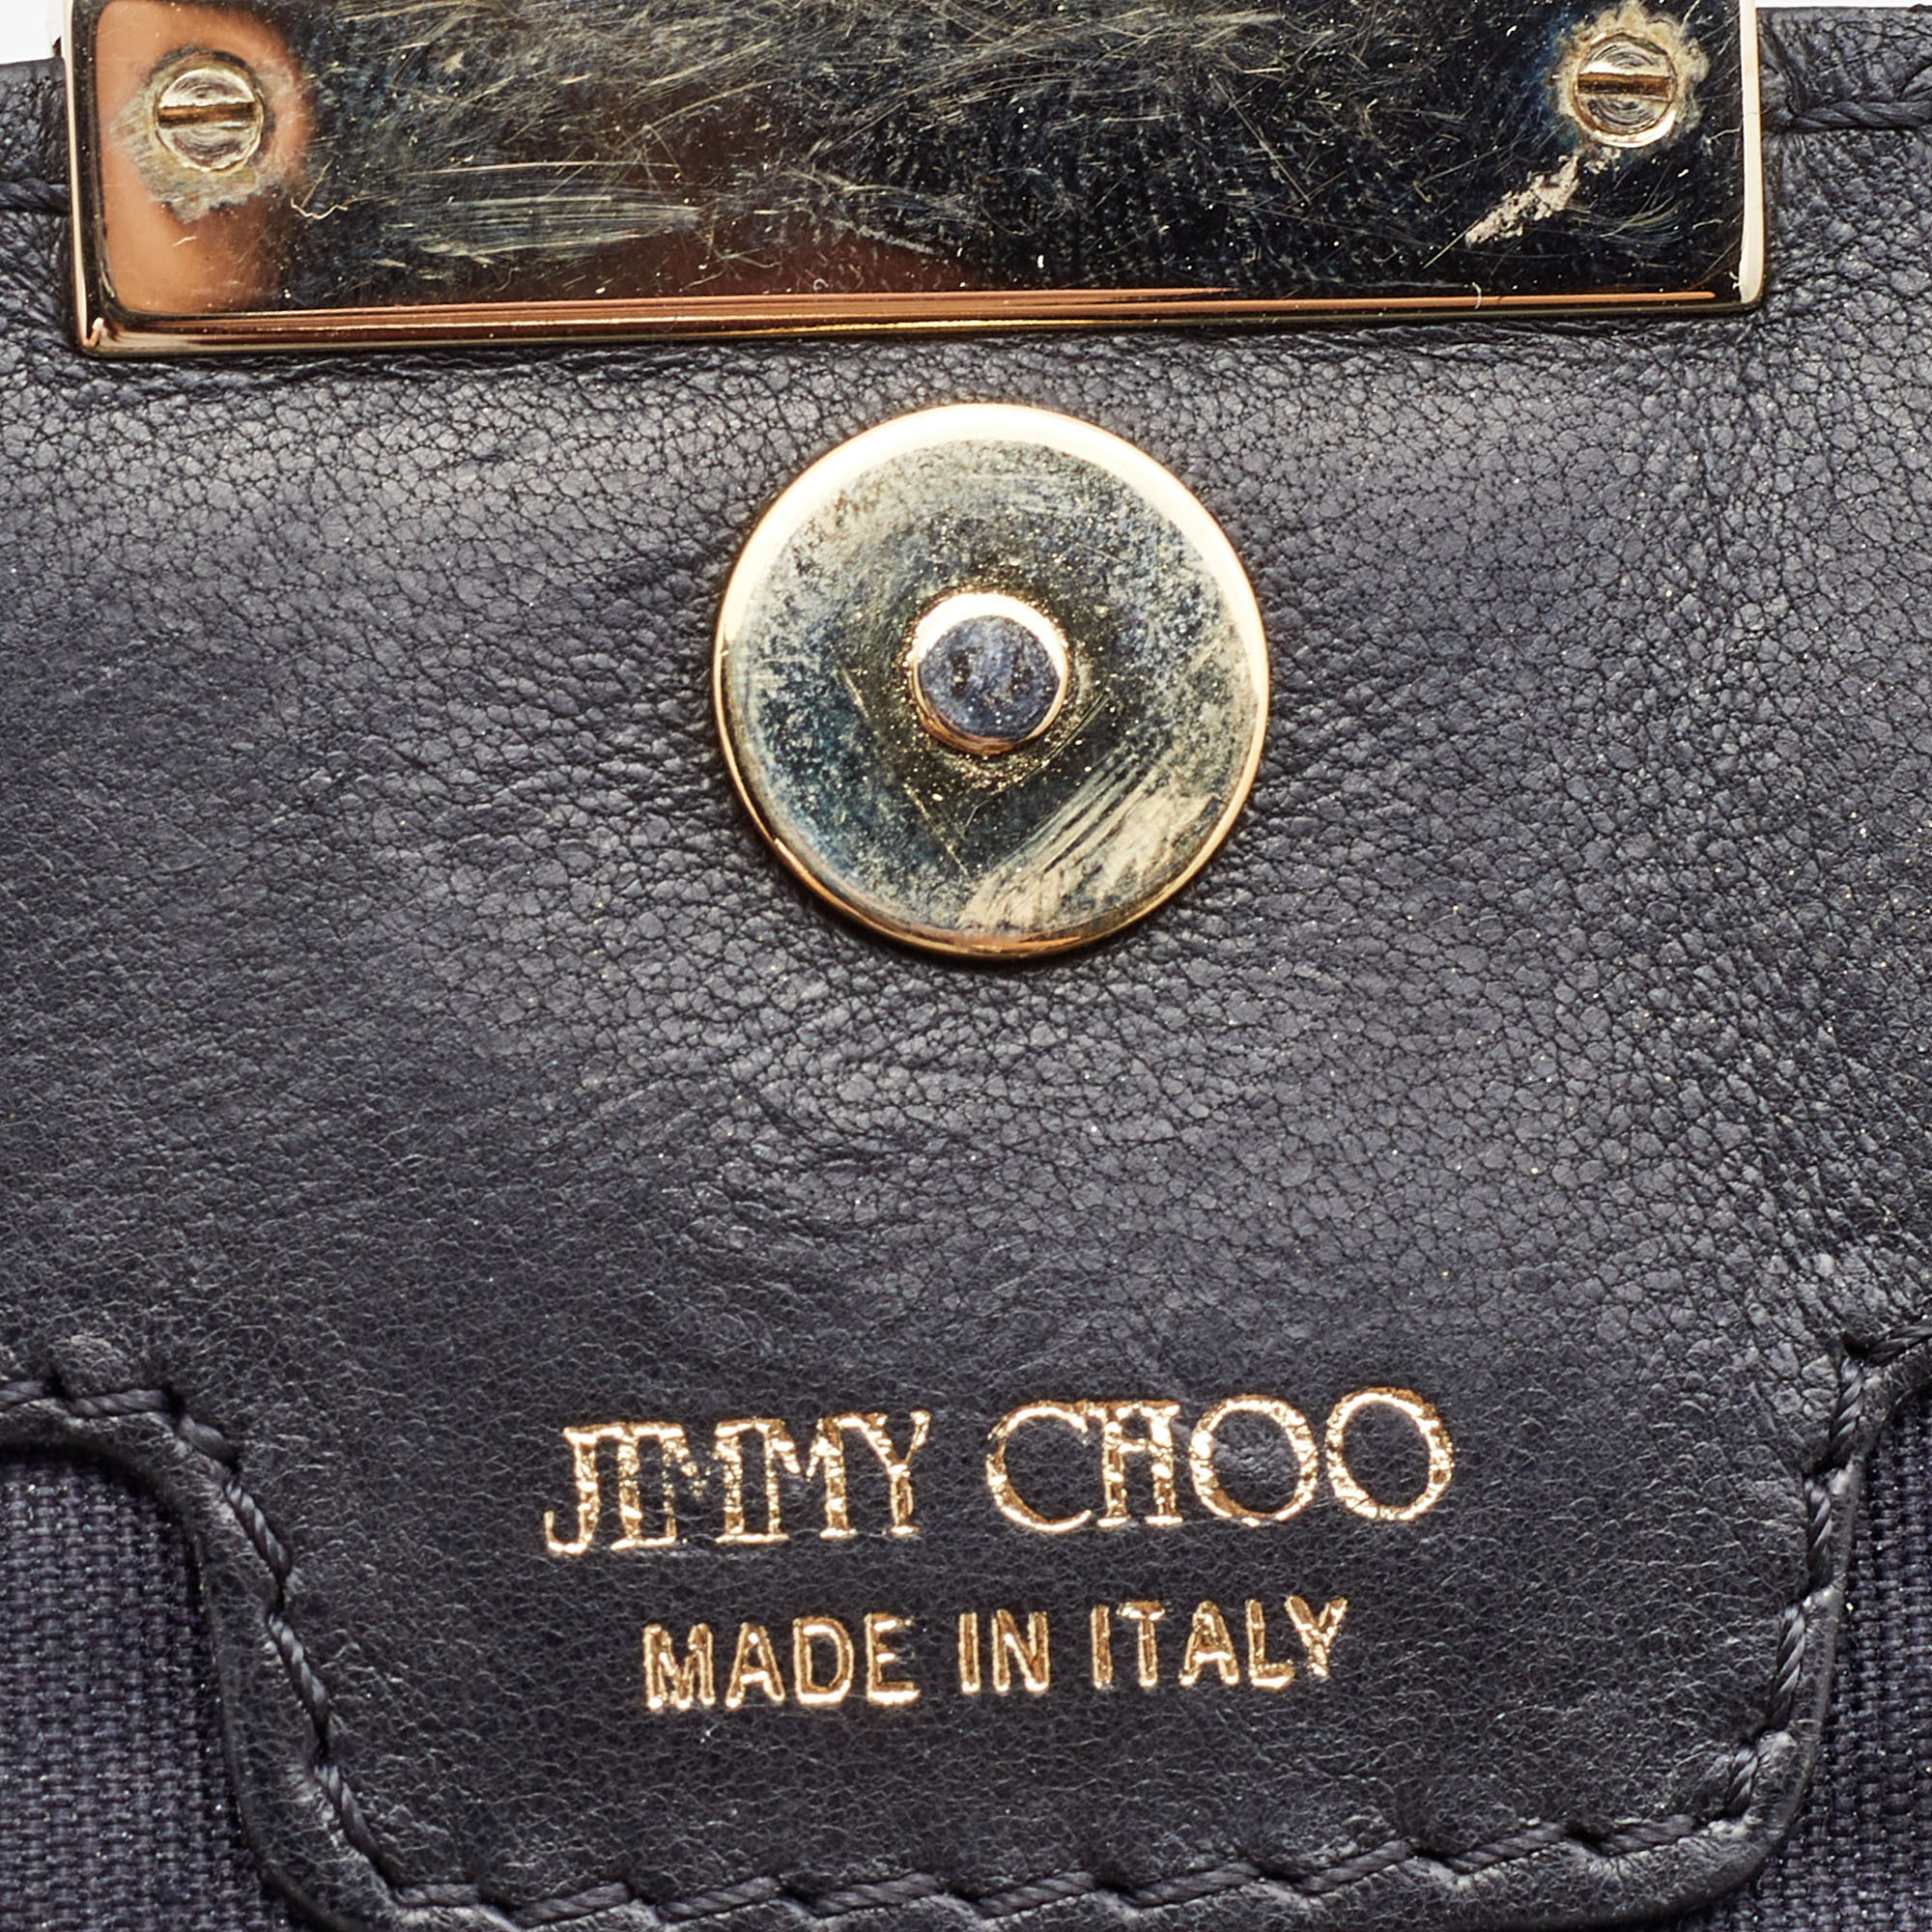 Jimmy Choo Black Snakeskin Embossed And Watersnake Leather Fringe Clutch